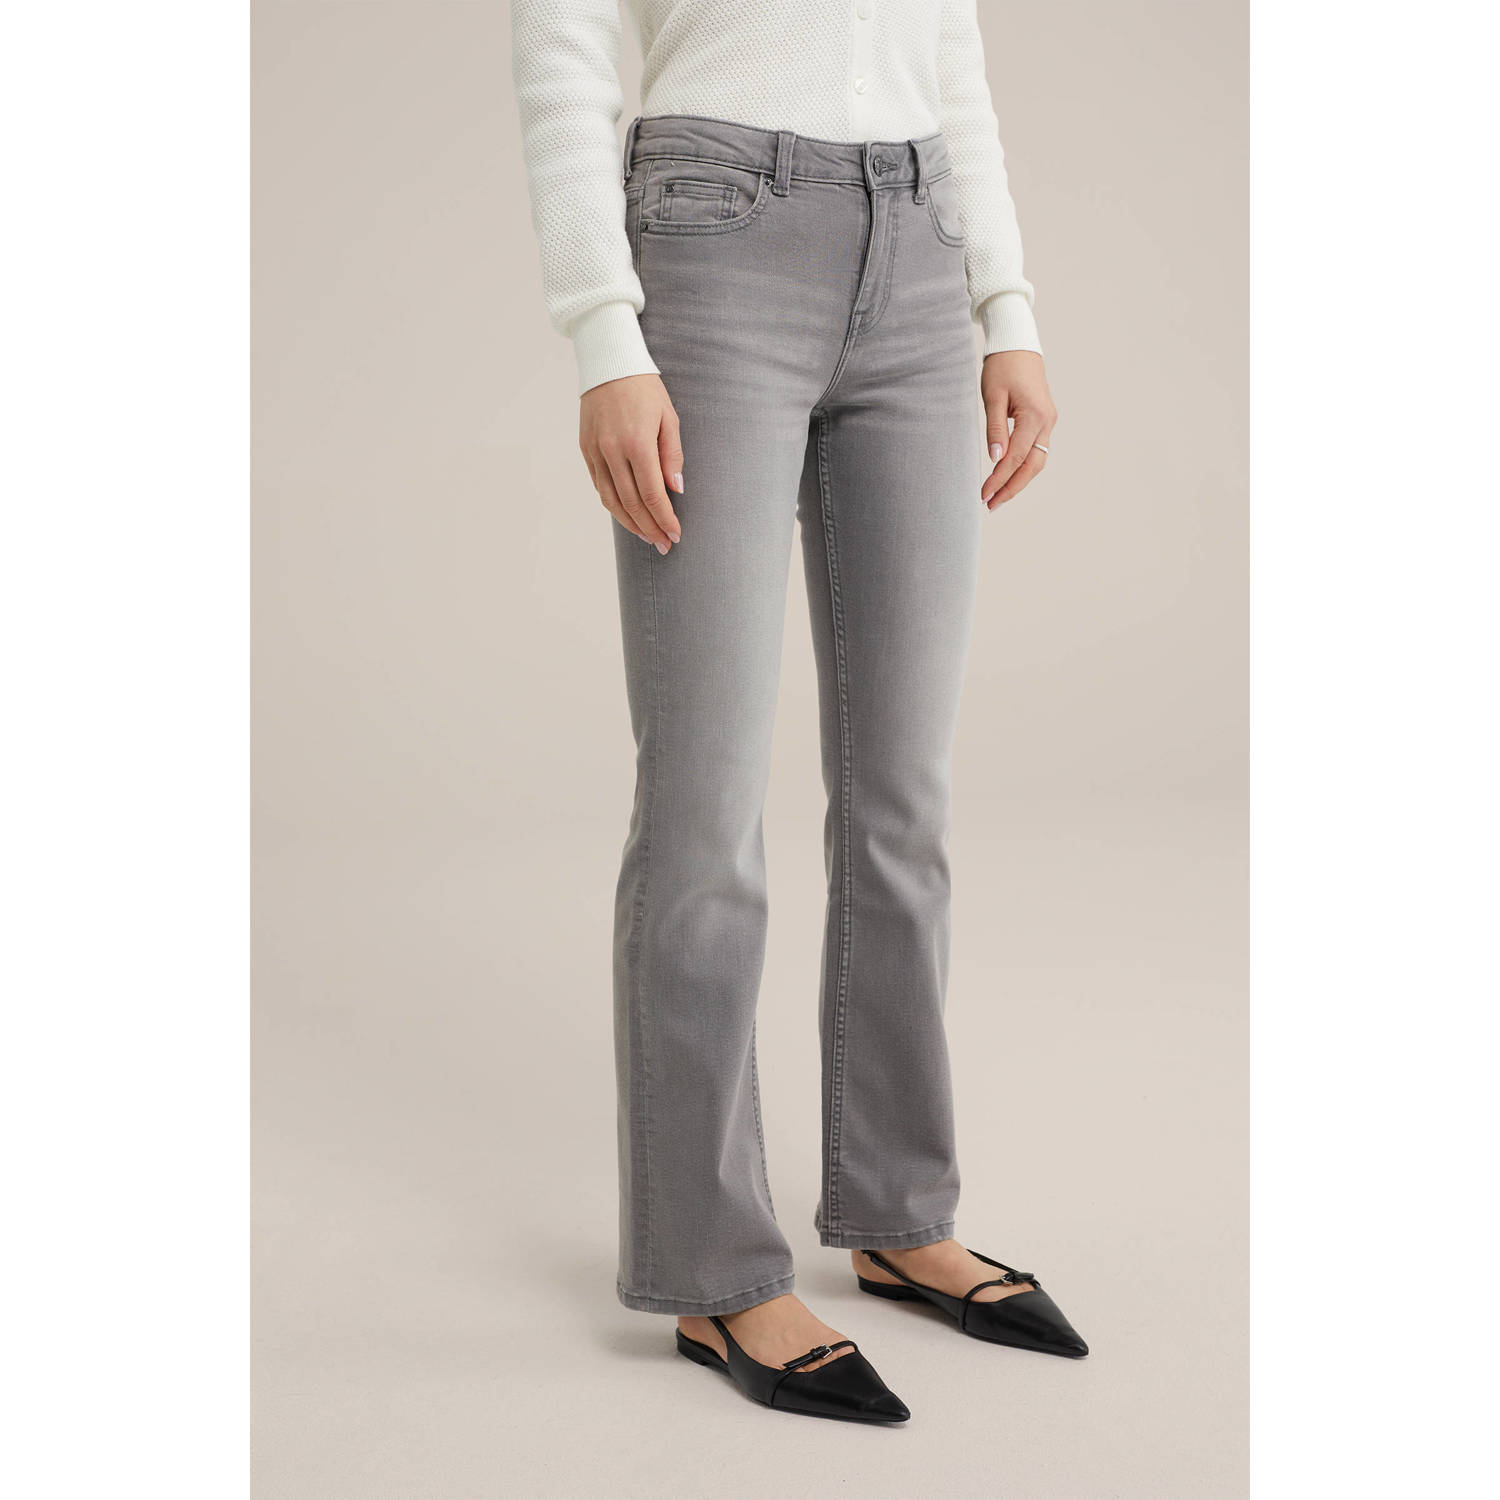 WE Fashion Blue Ridge high waist straight jeans soft grey denim